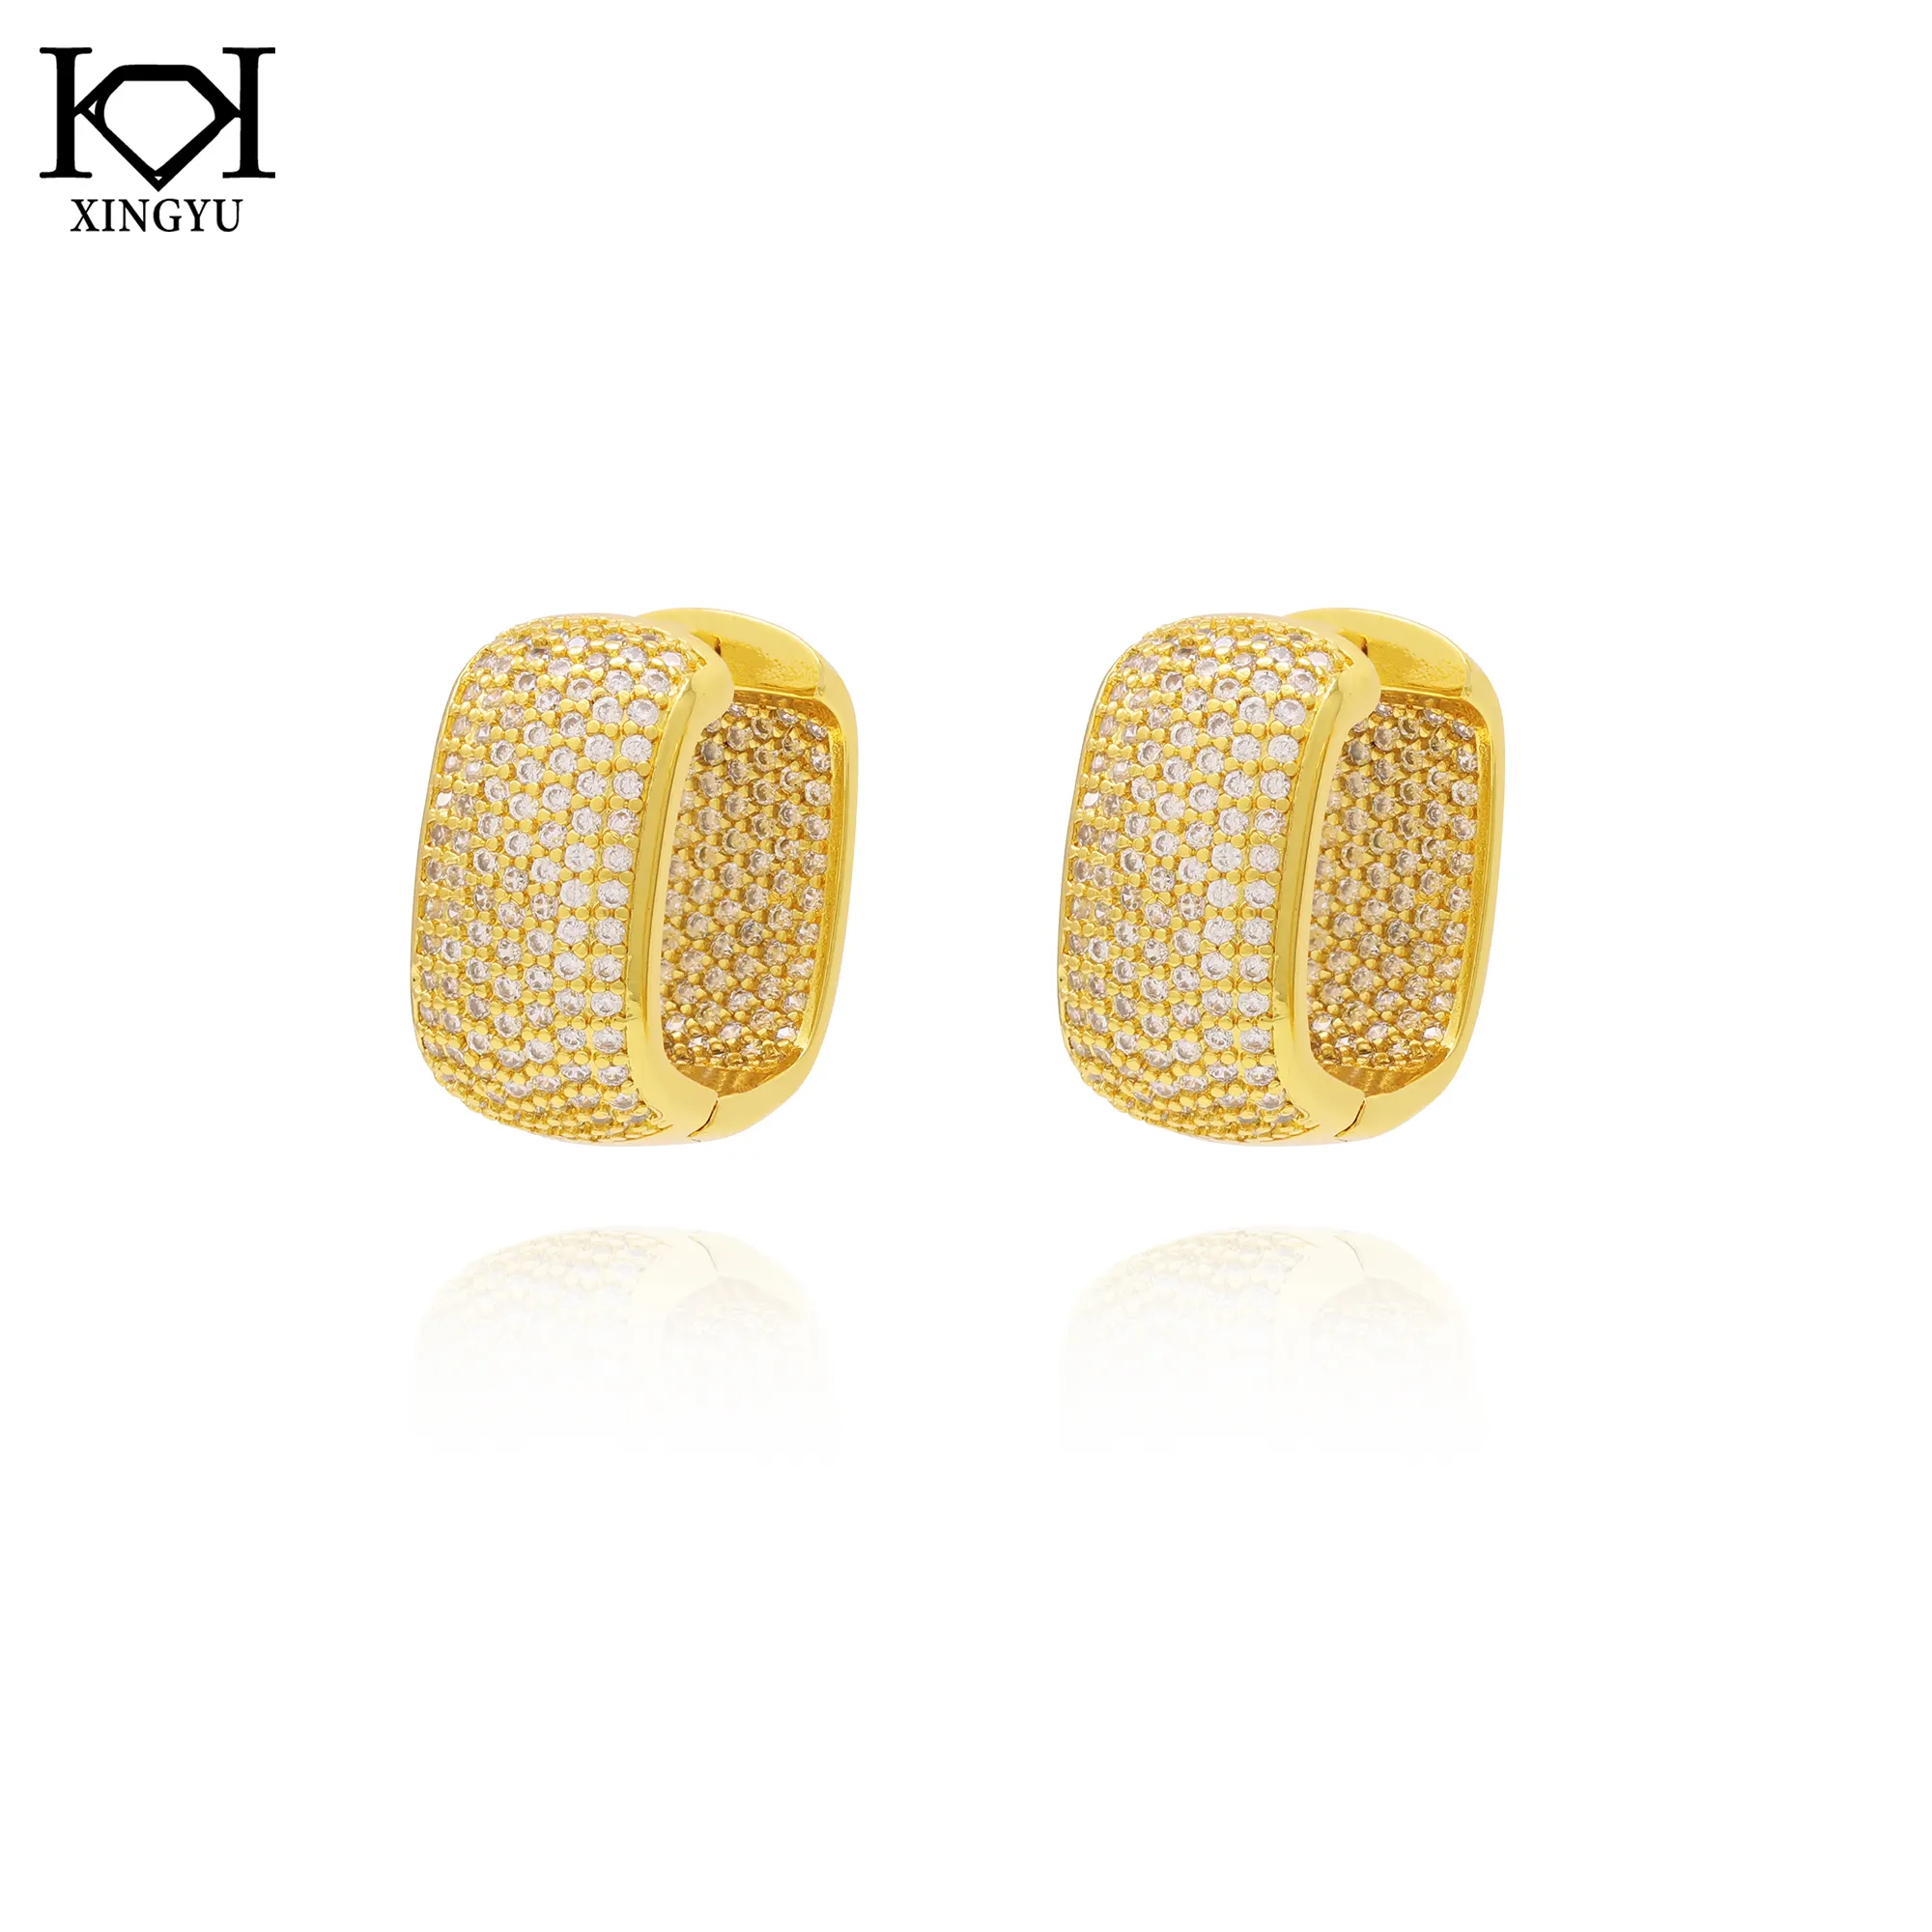 Xingyu Jewelry 18K Gold Plated Huggie Earring For Women Hoop Earring